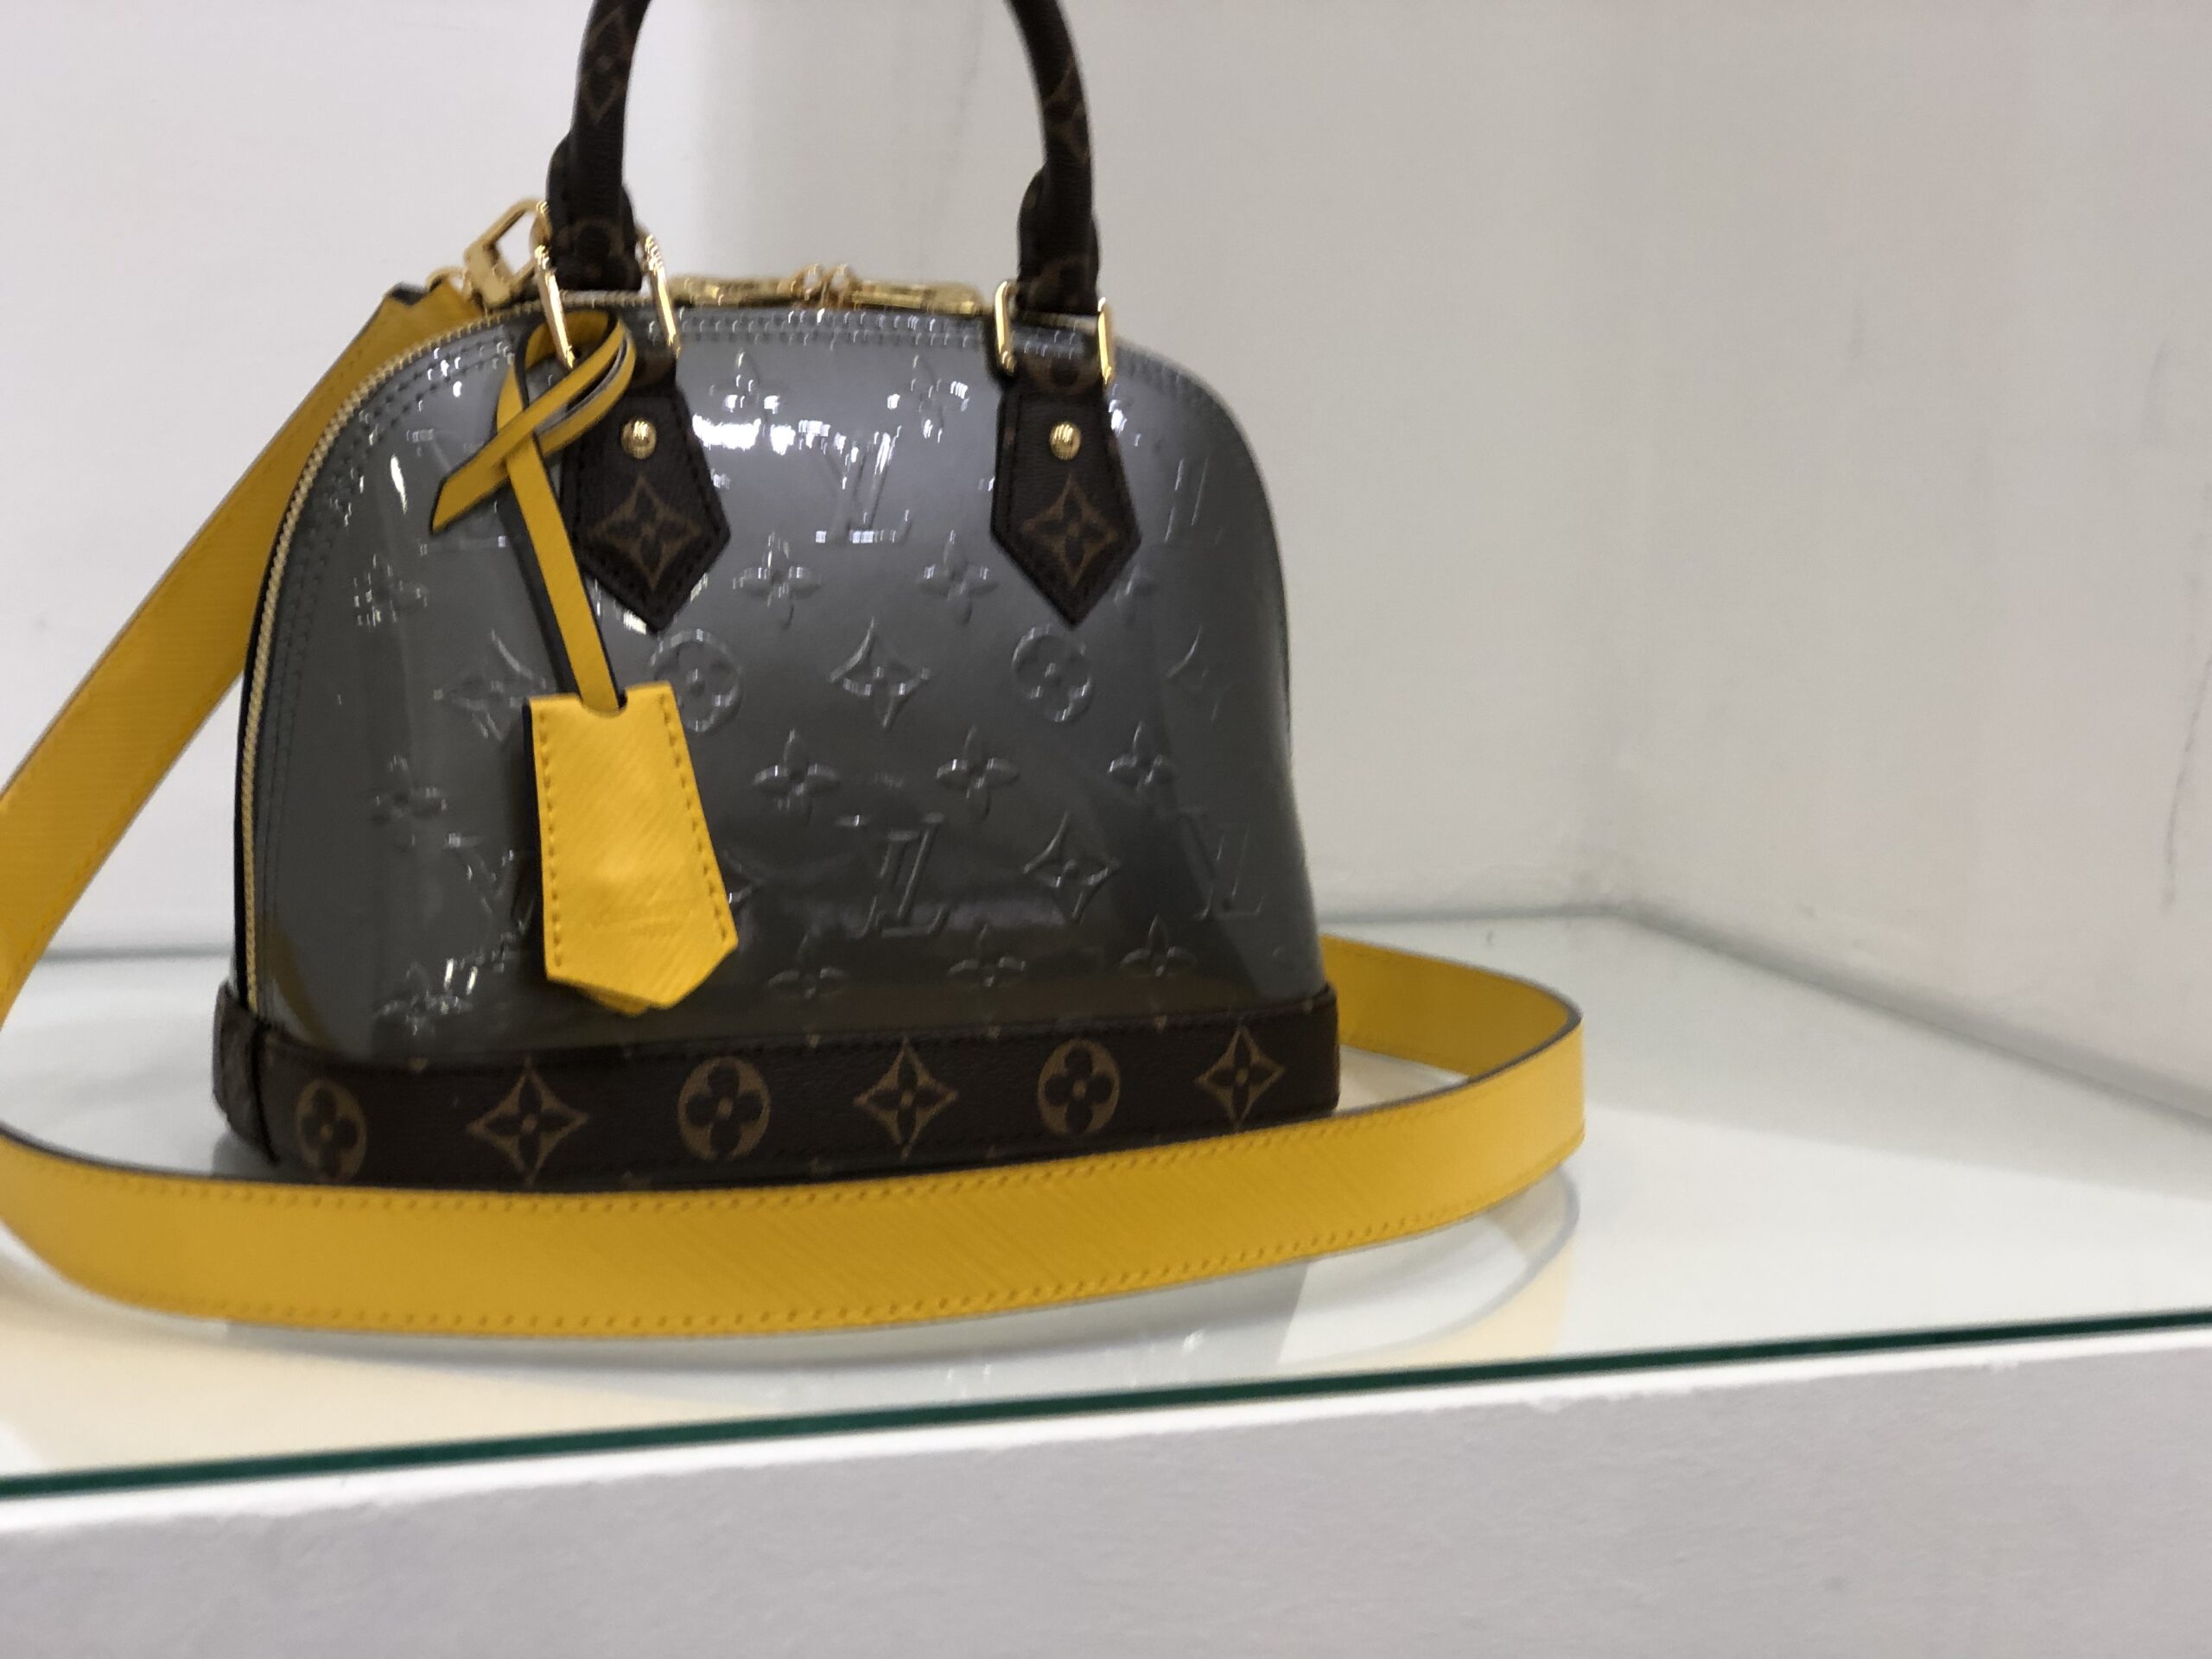 Alma BB Bag - Luxury Exotic Leather Bags - Handbags